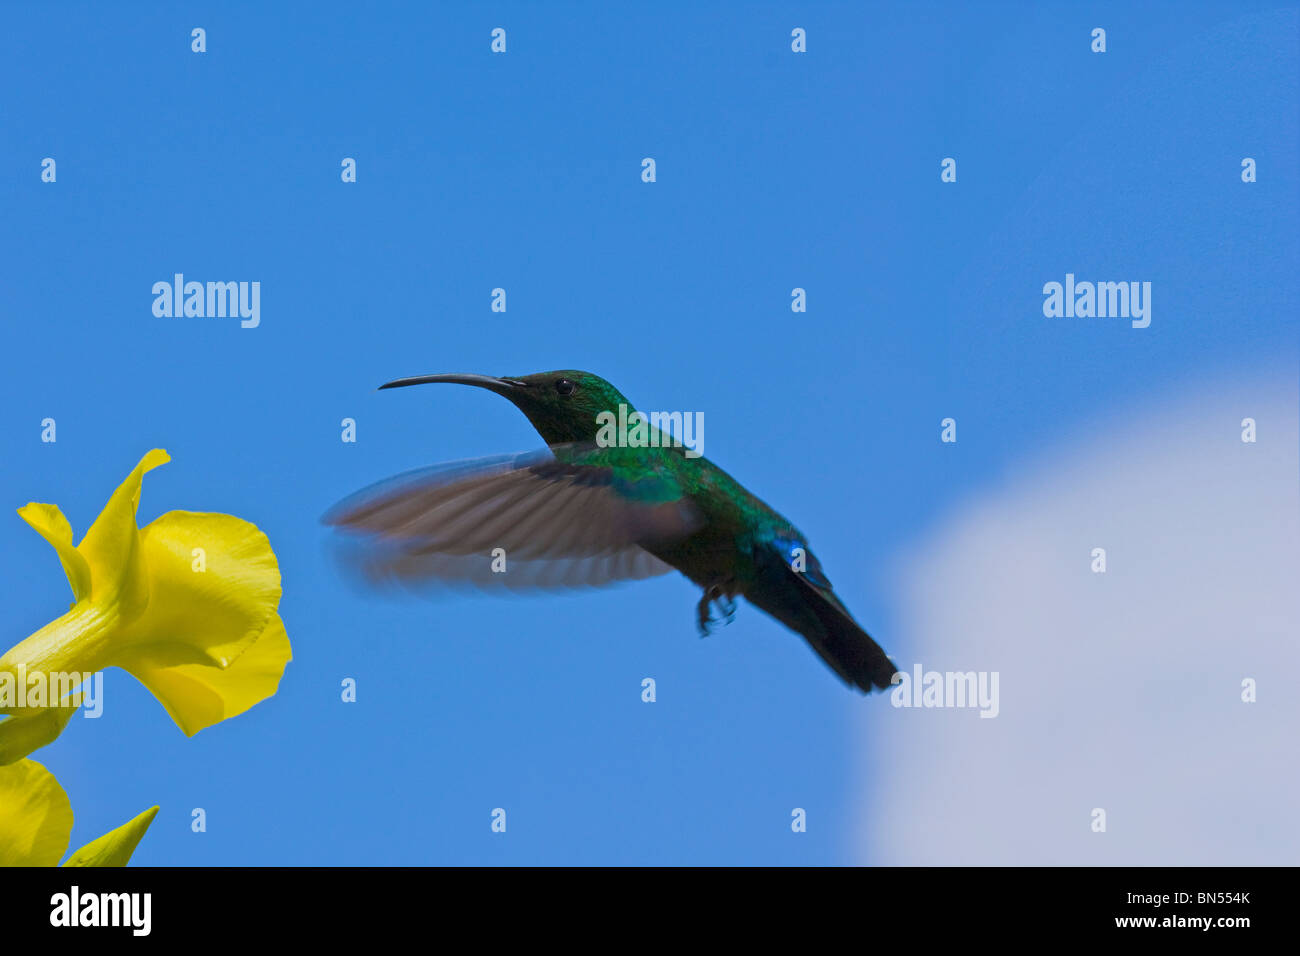 Hummingbird feeding off Allamanda Stock Photo